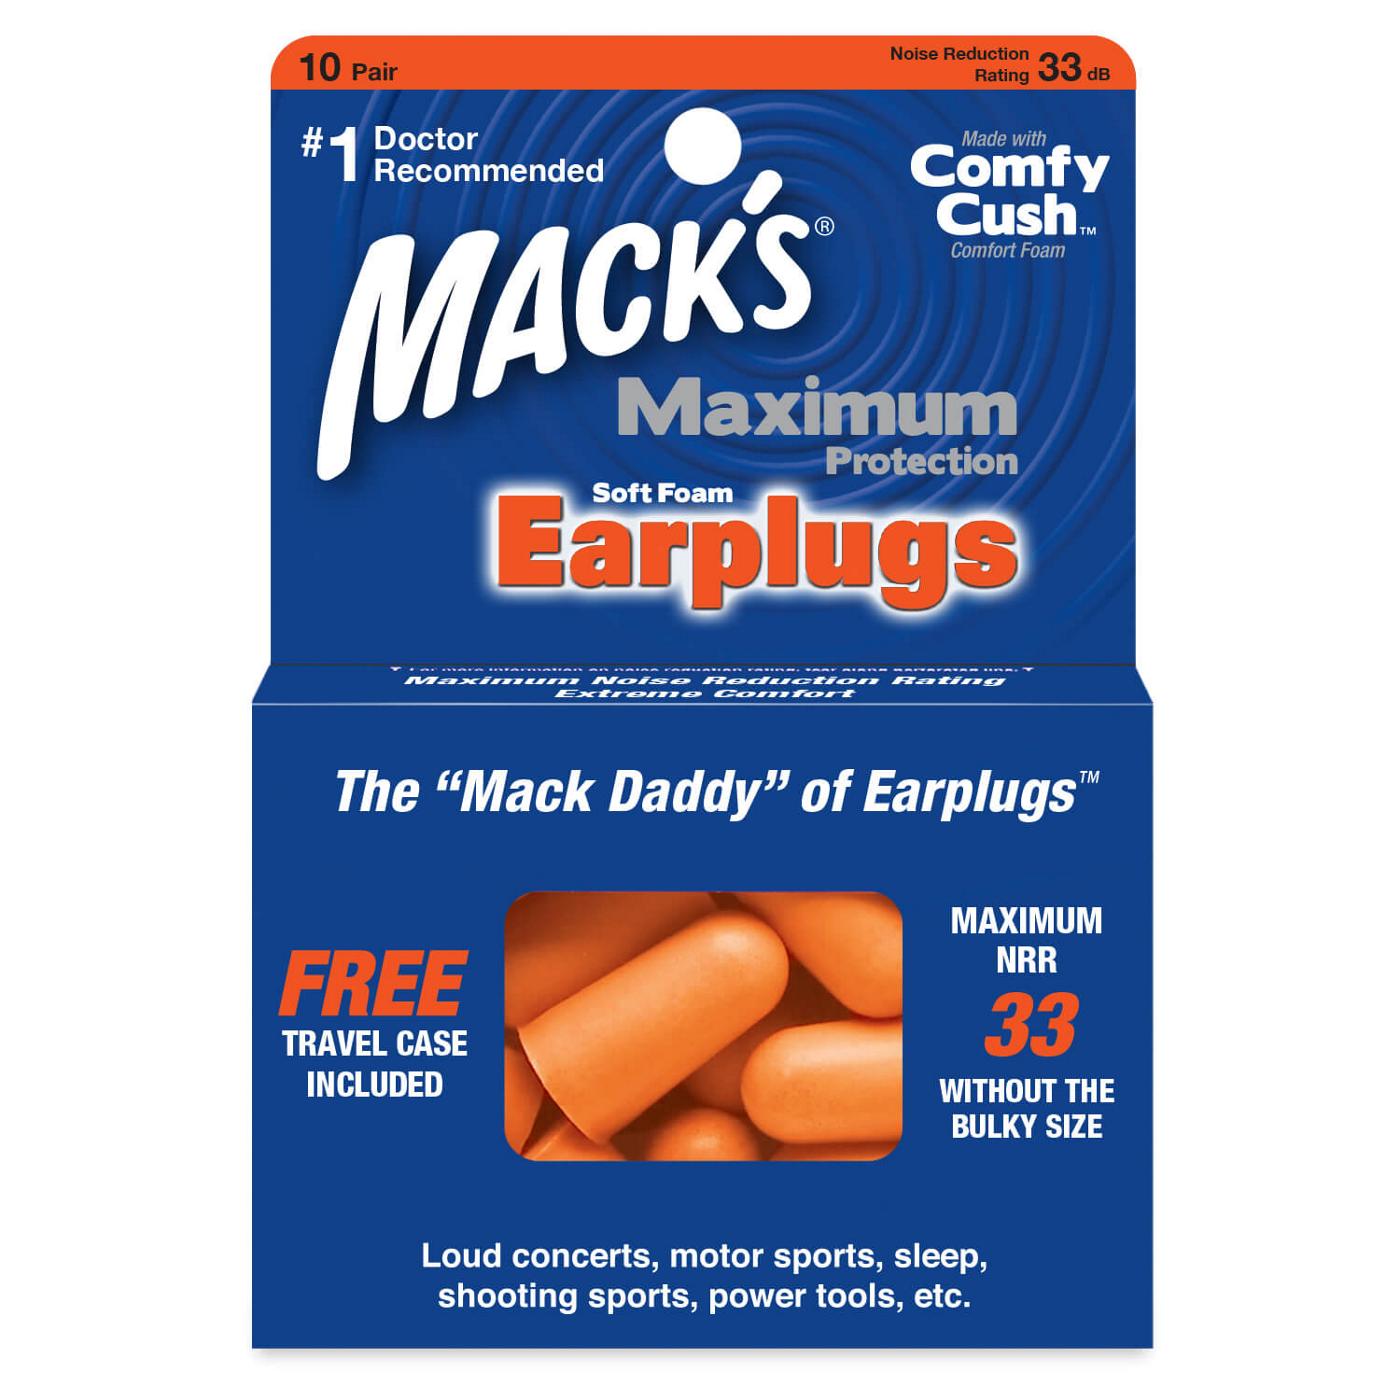 Mack's Maximum Protection Soft Foam Earplugs; image 1 of 2